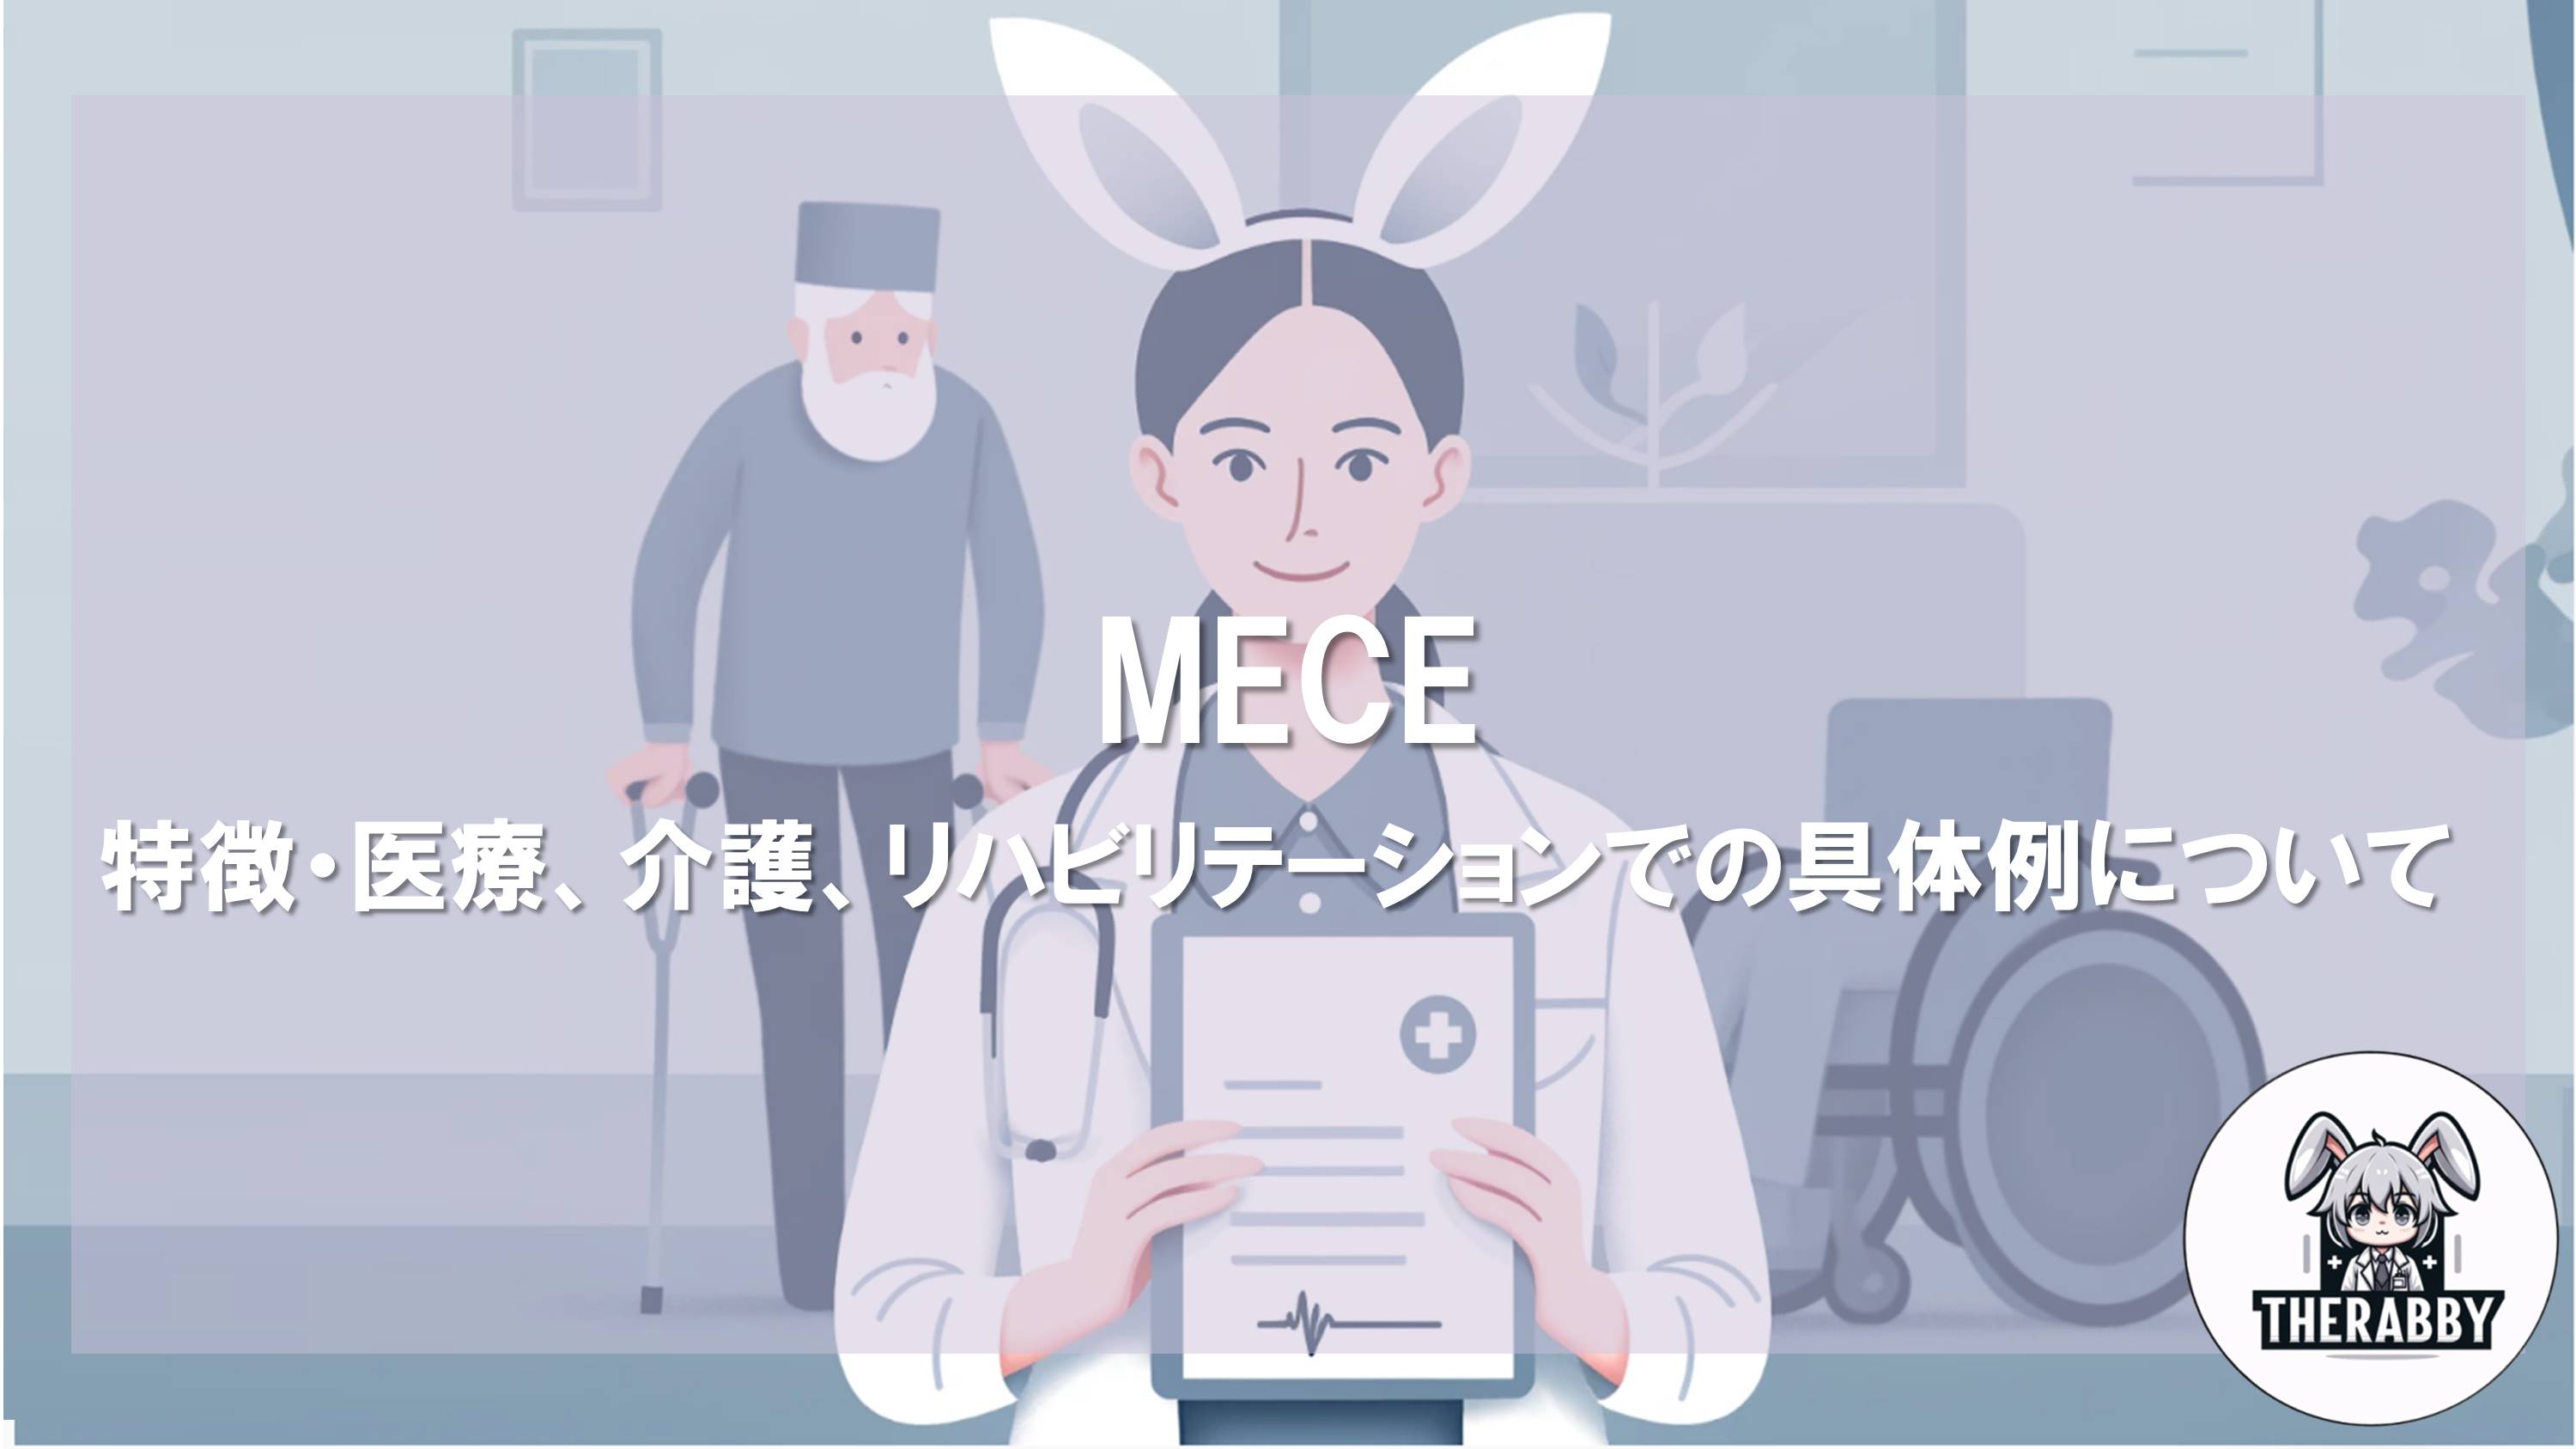 MECE - 特徴・医療、介護、リハビリテーションでの具体例について